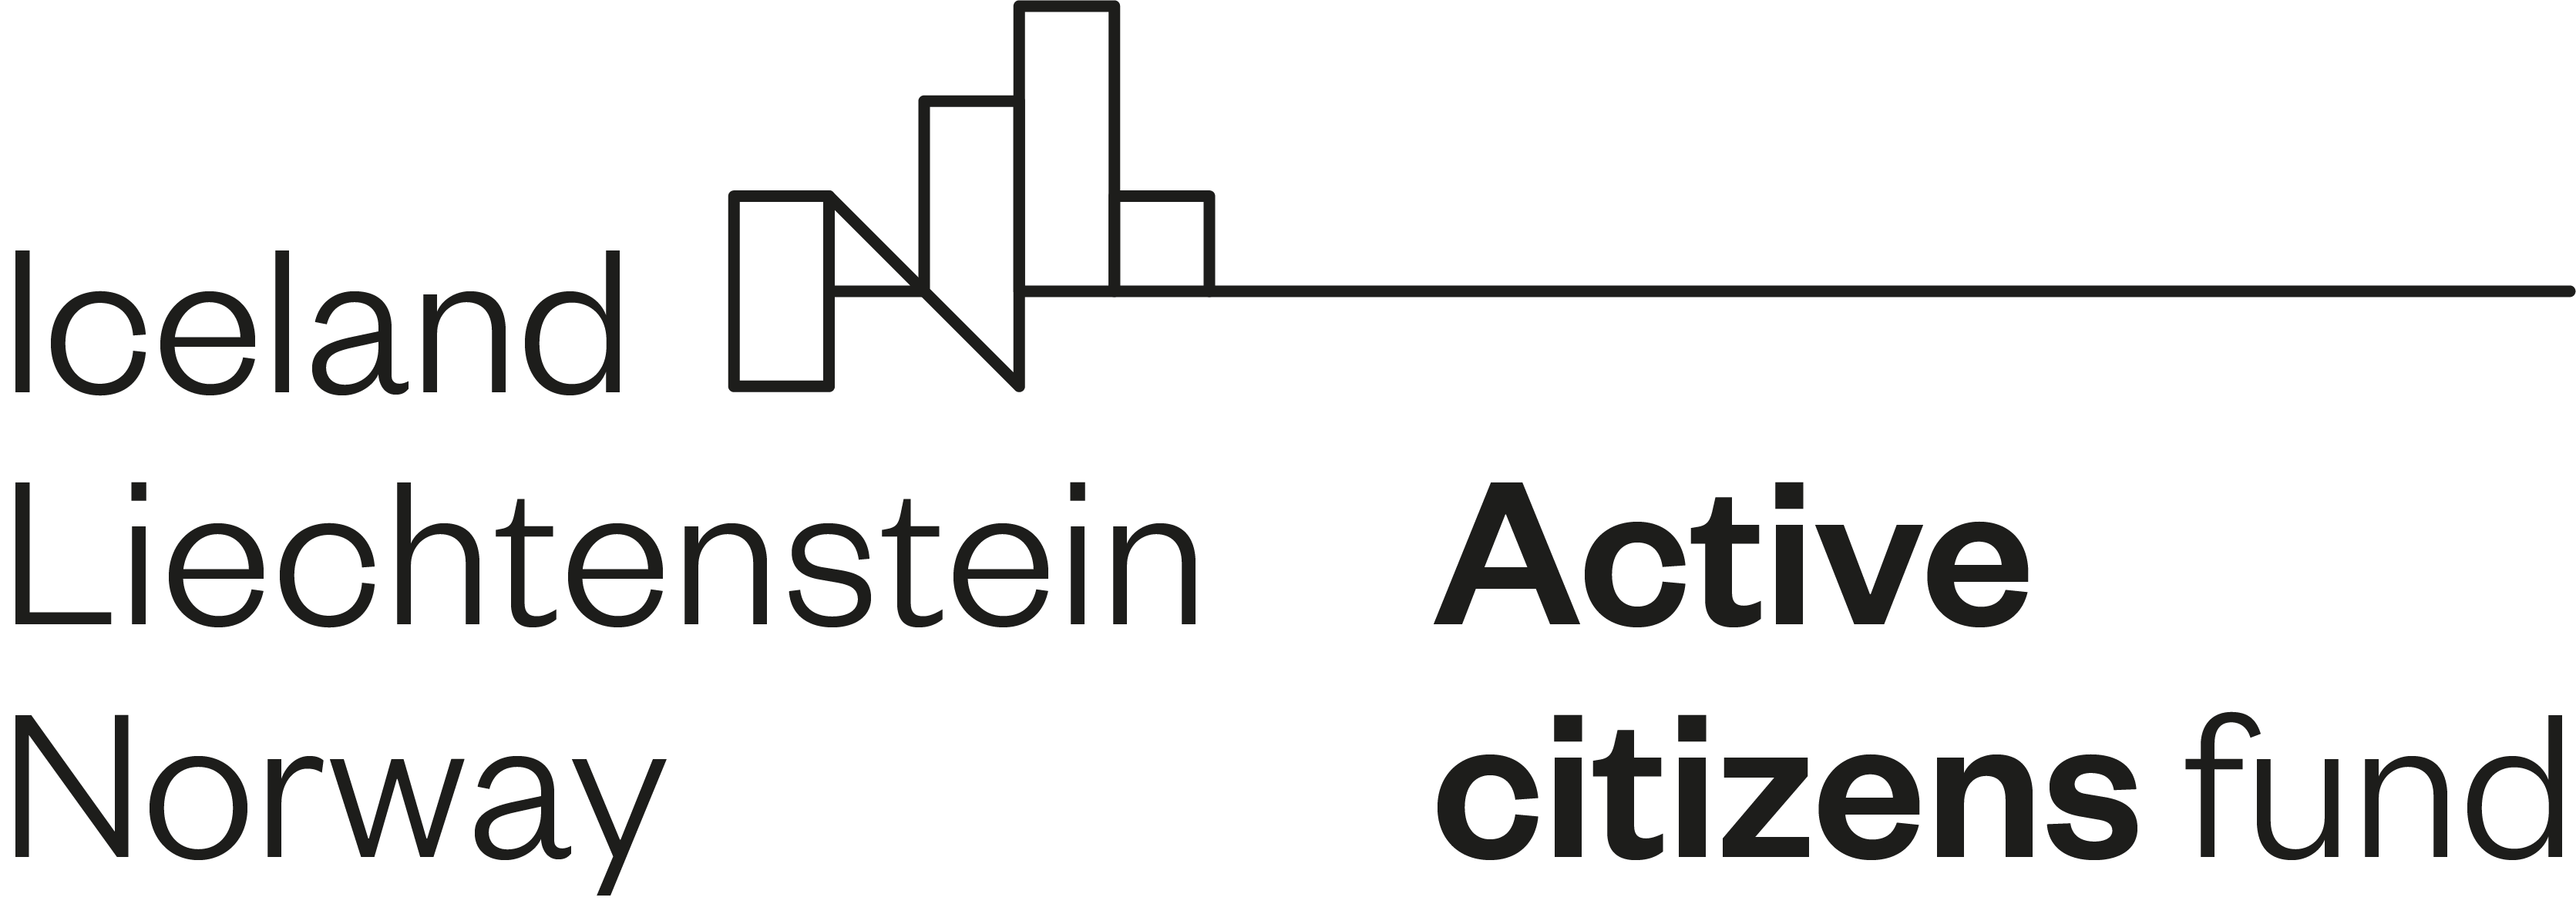 logo programu Aktywni Obywatele